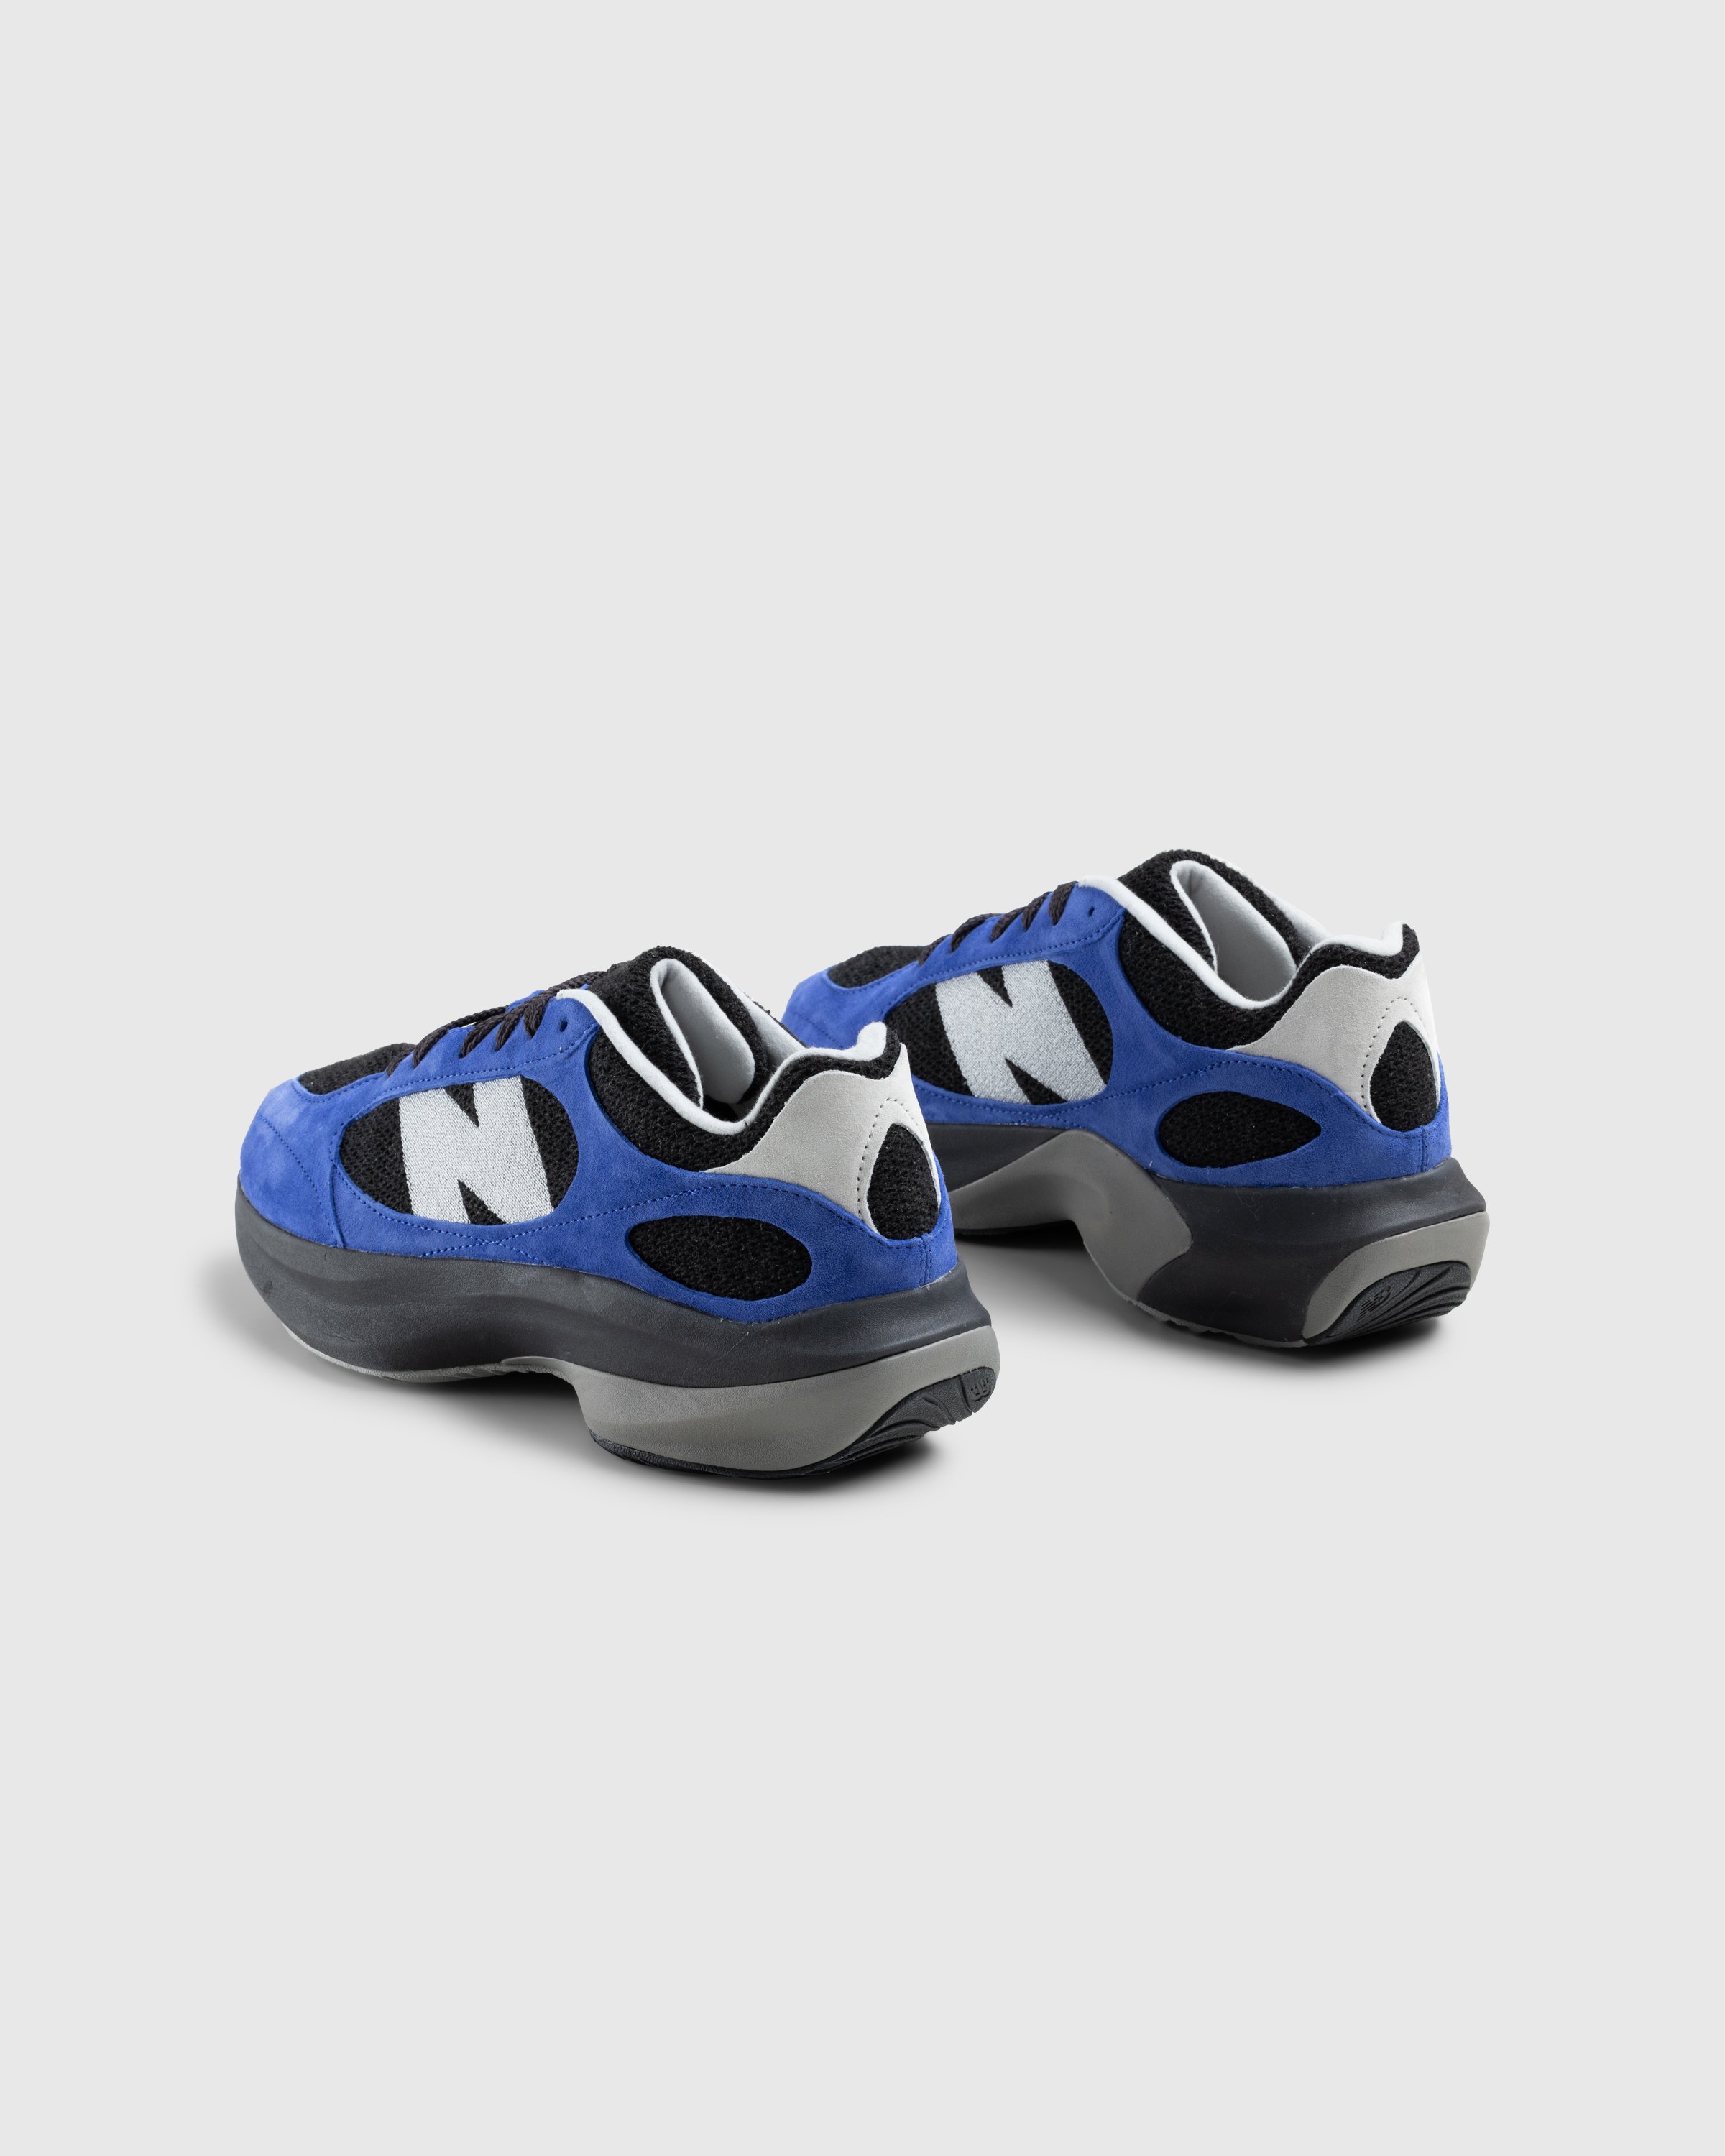 New Balance - WRPD Runner Marine Blue/Summer Fog - Footwear - Blue - Image 4